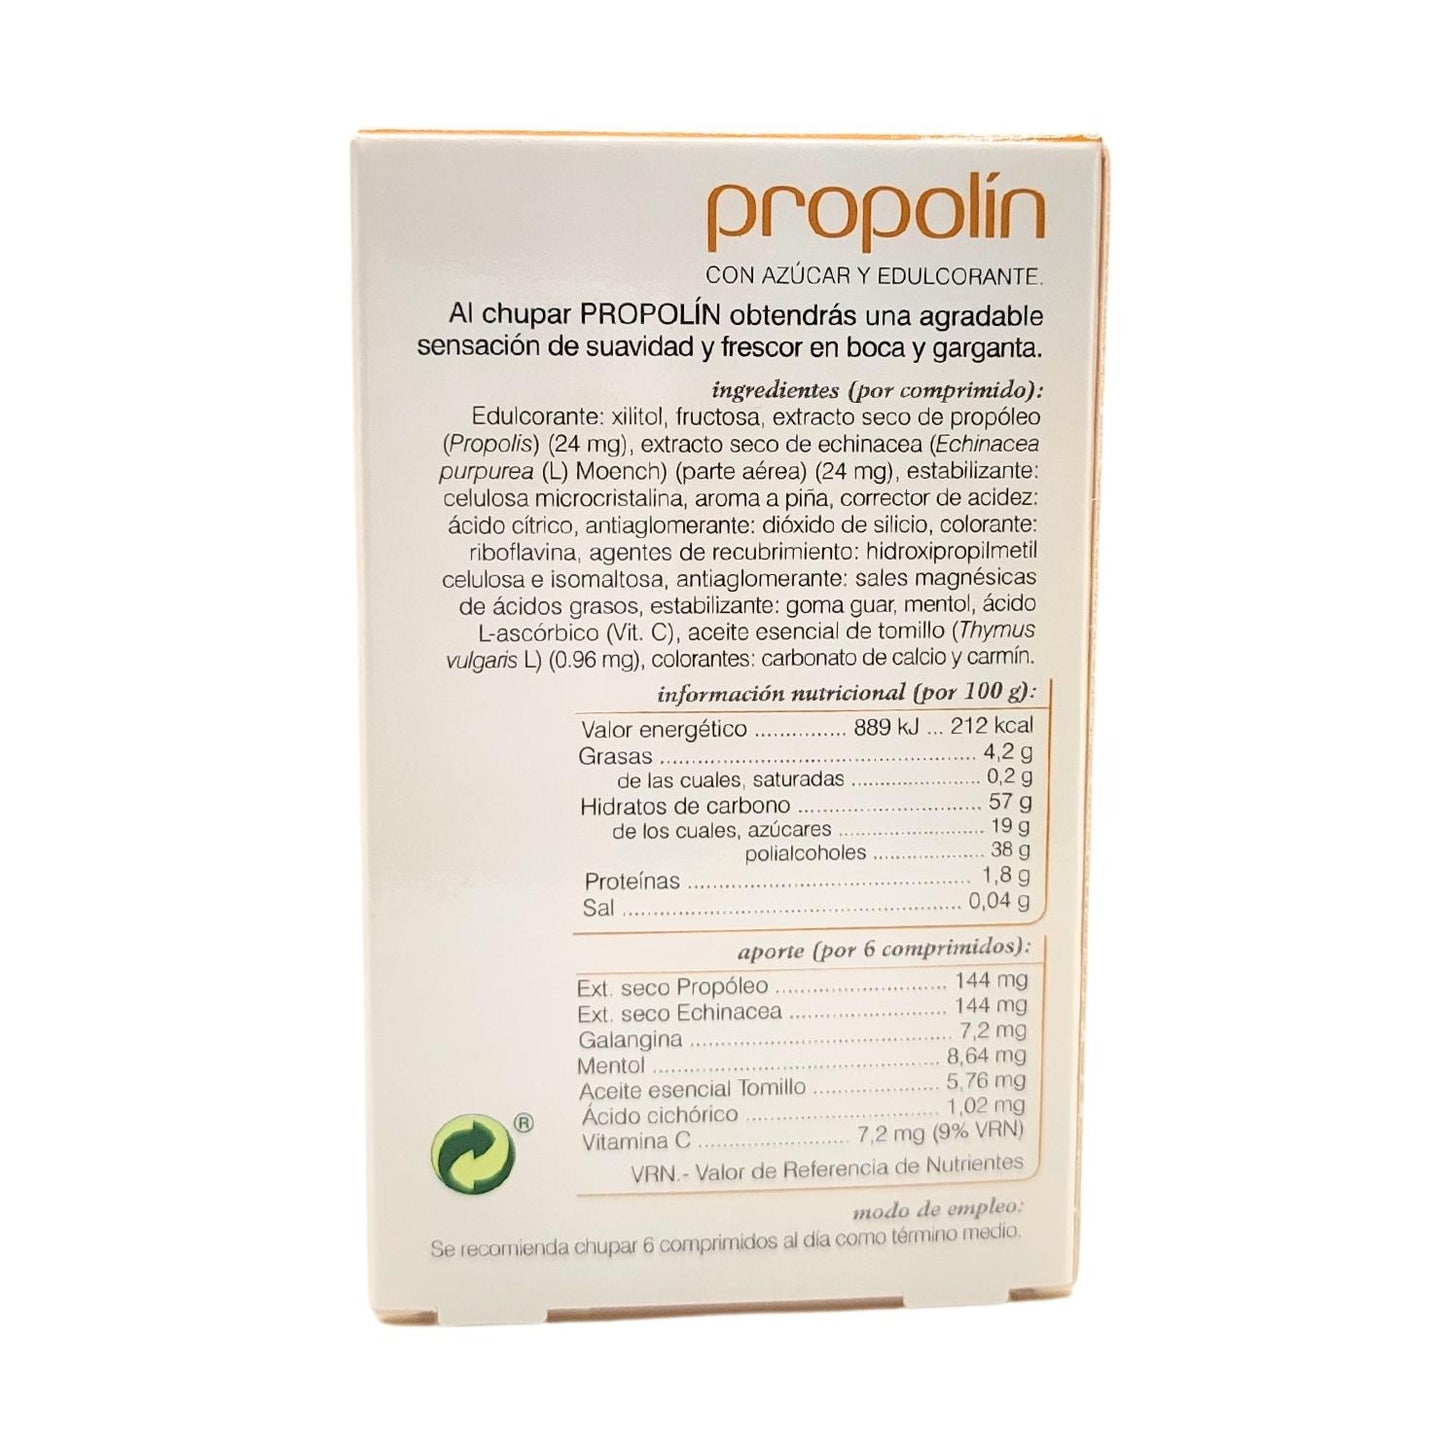 Propolín Garganta - Soria Natural - 48 comprimidos masticables